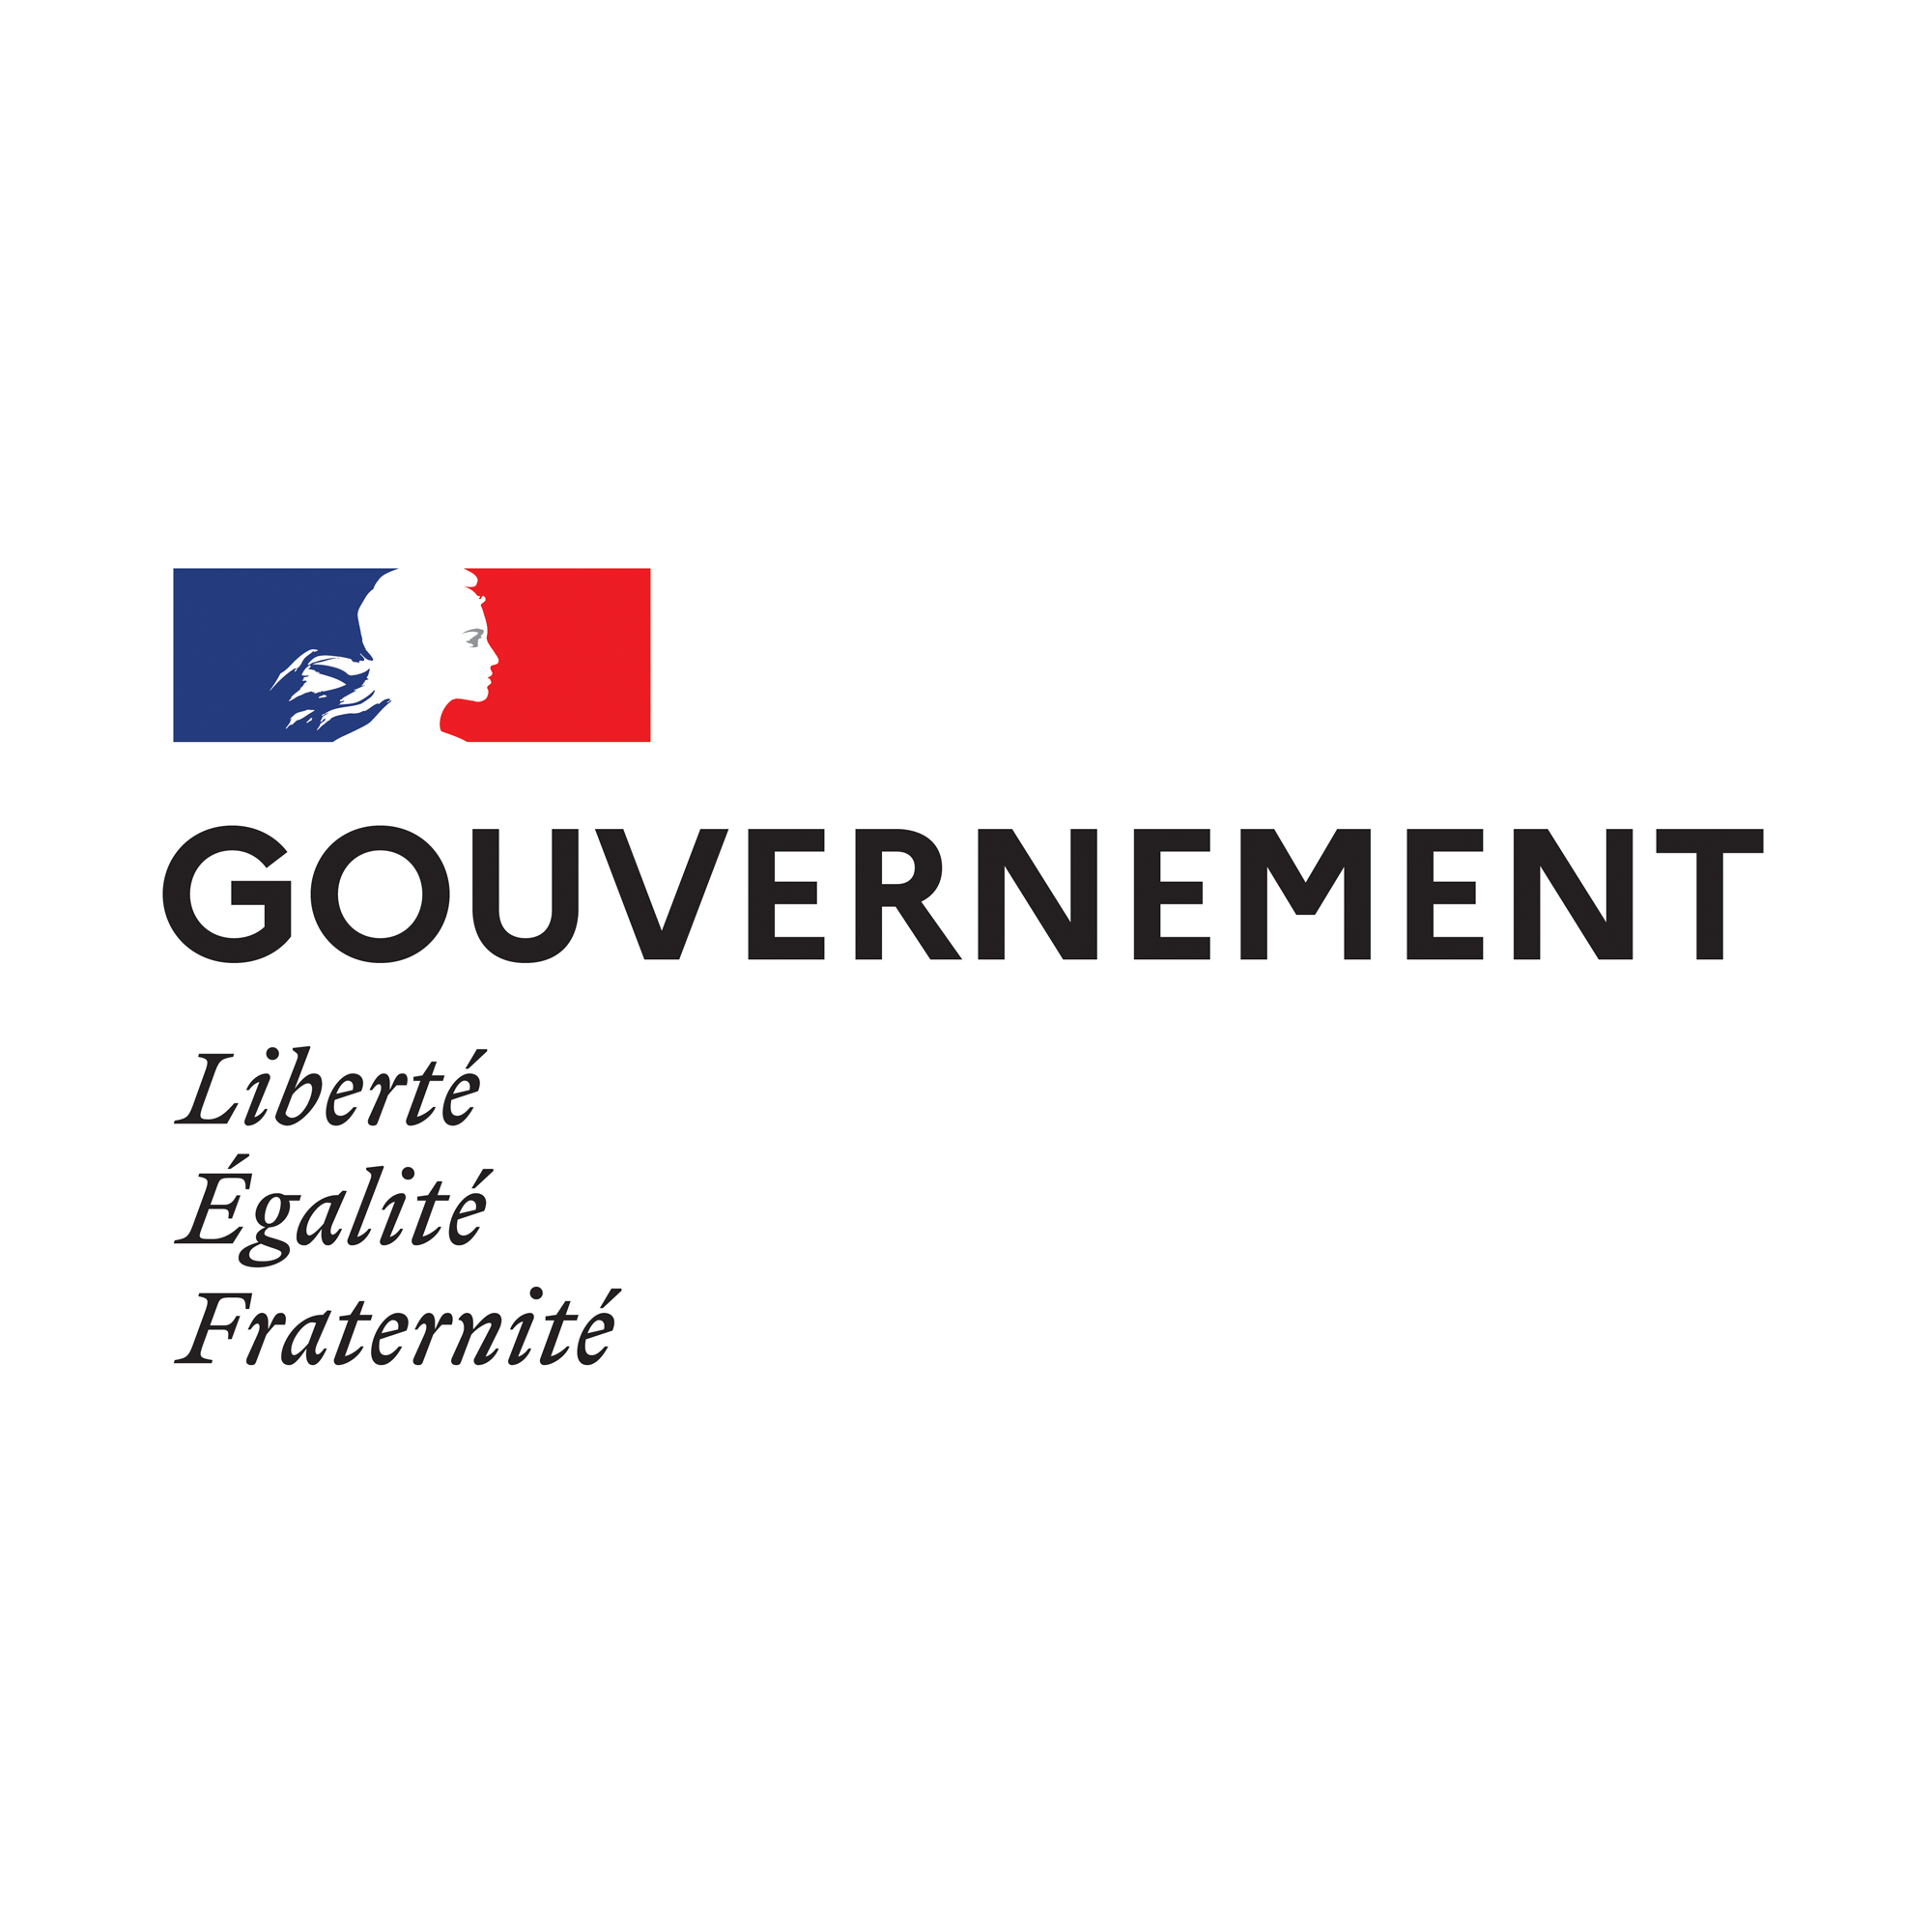 1bis - Logo Gouvernement.png